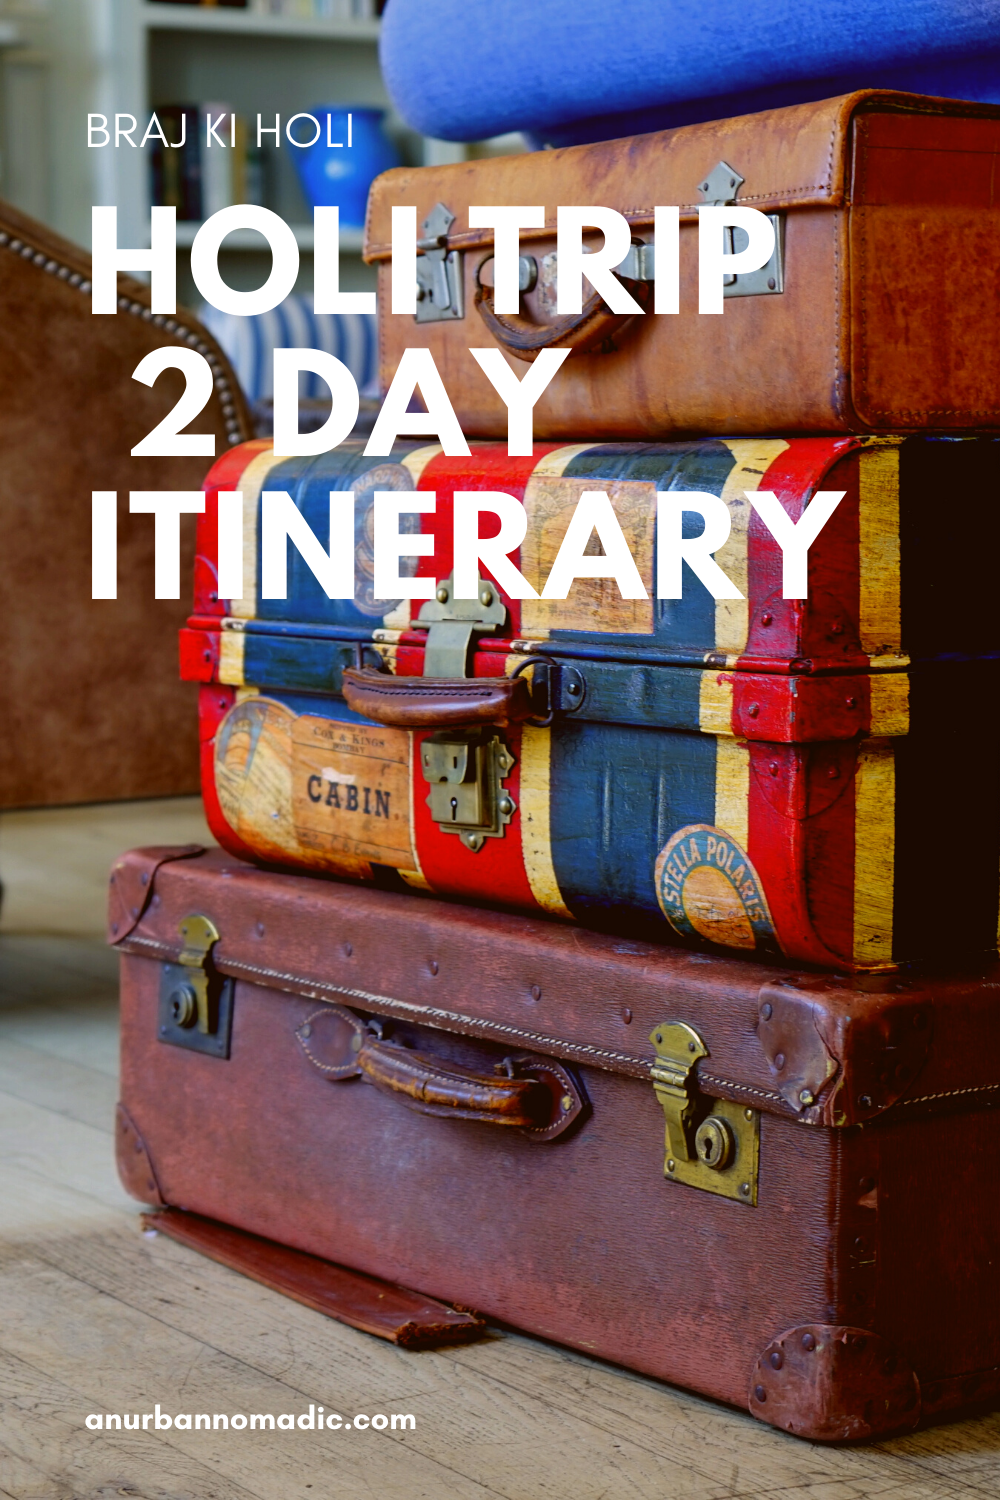 Holi Trip - 2 day itinerary Braj Ki Holi